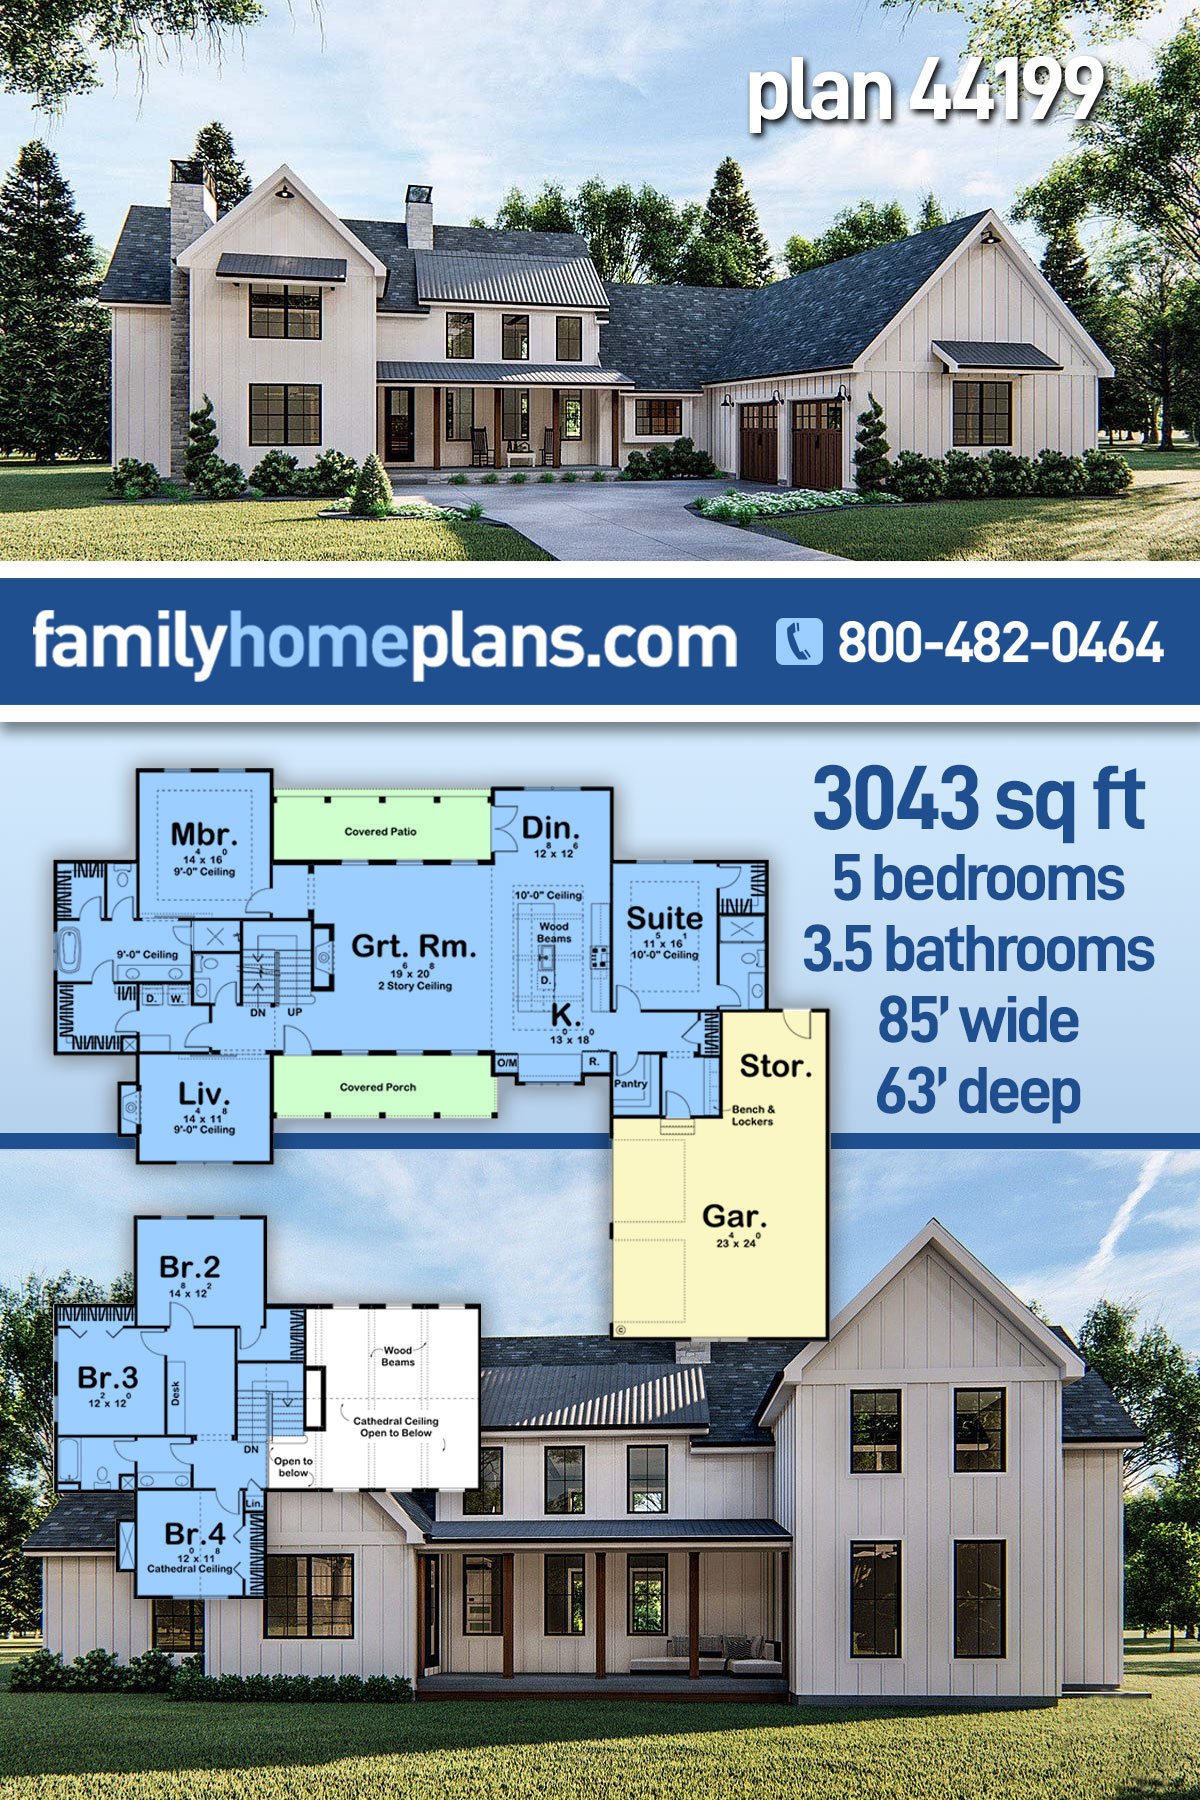 House Plan 44199